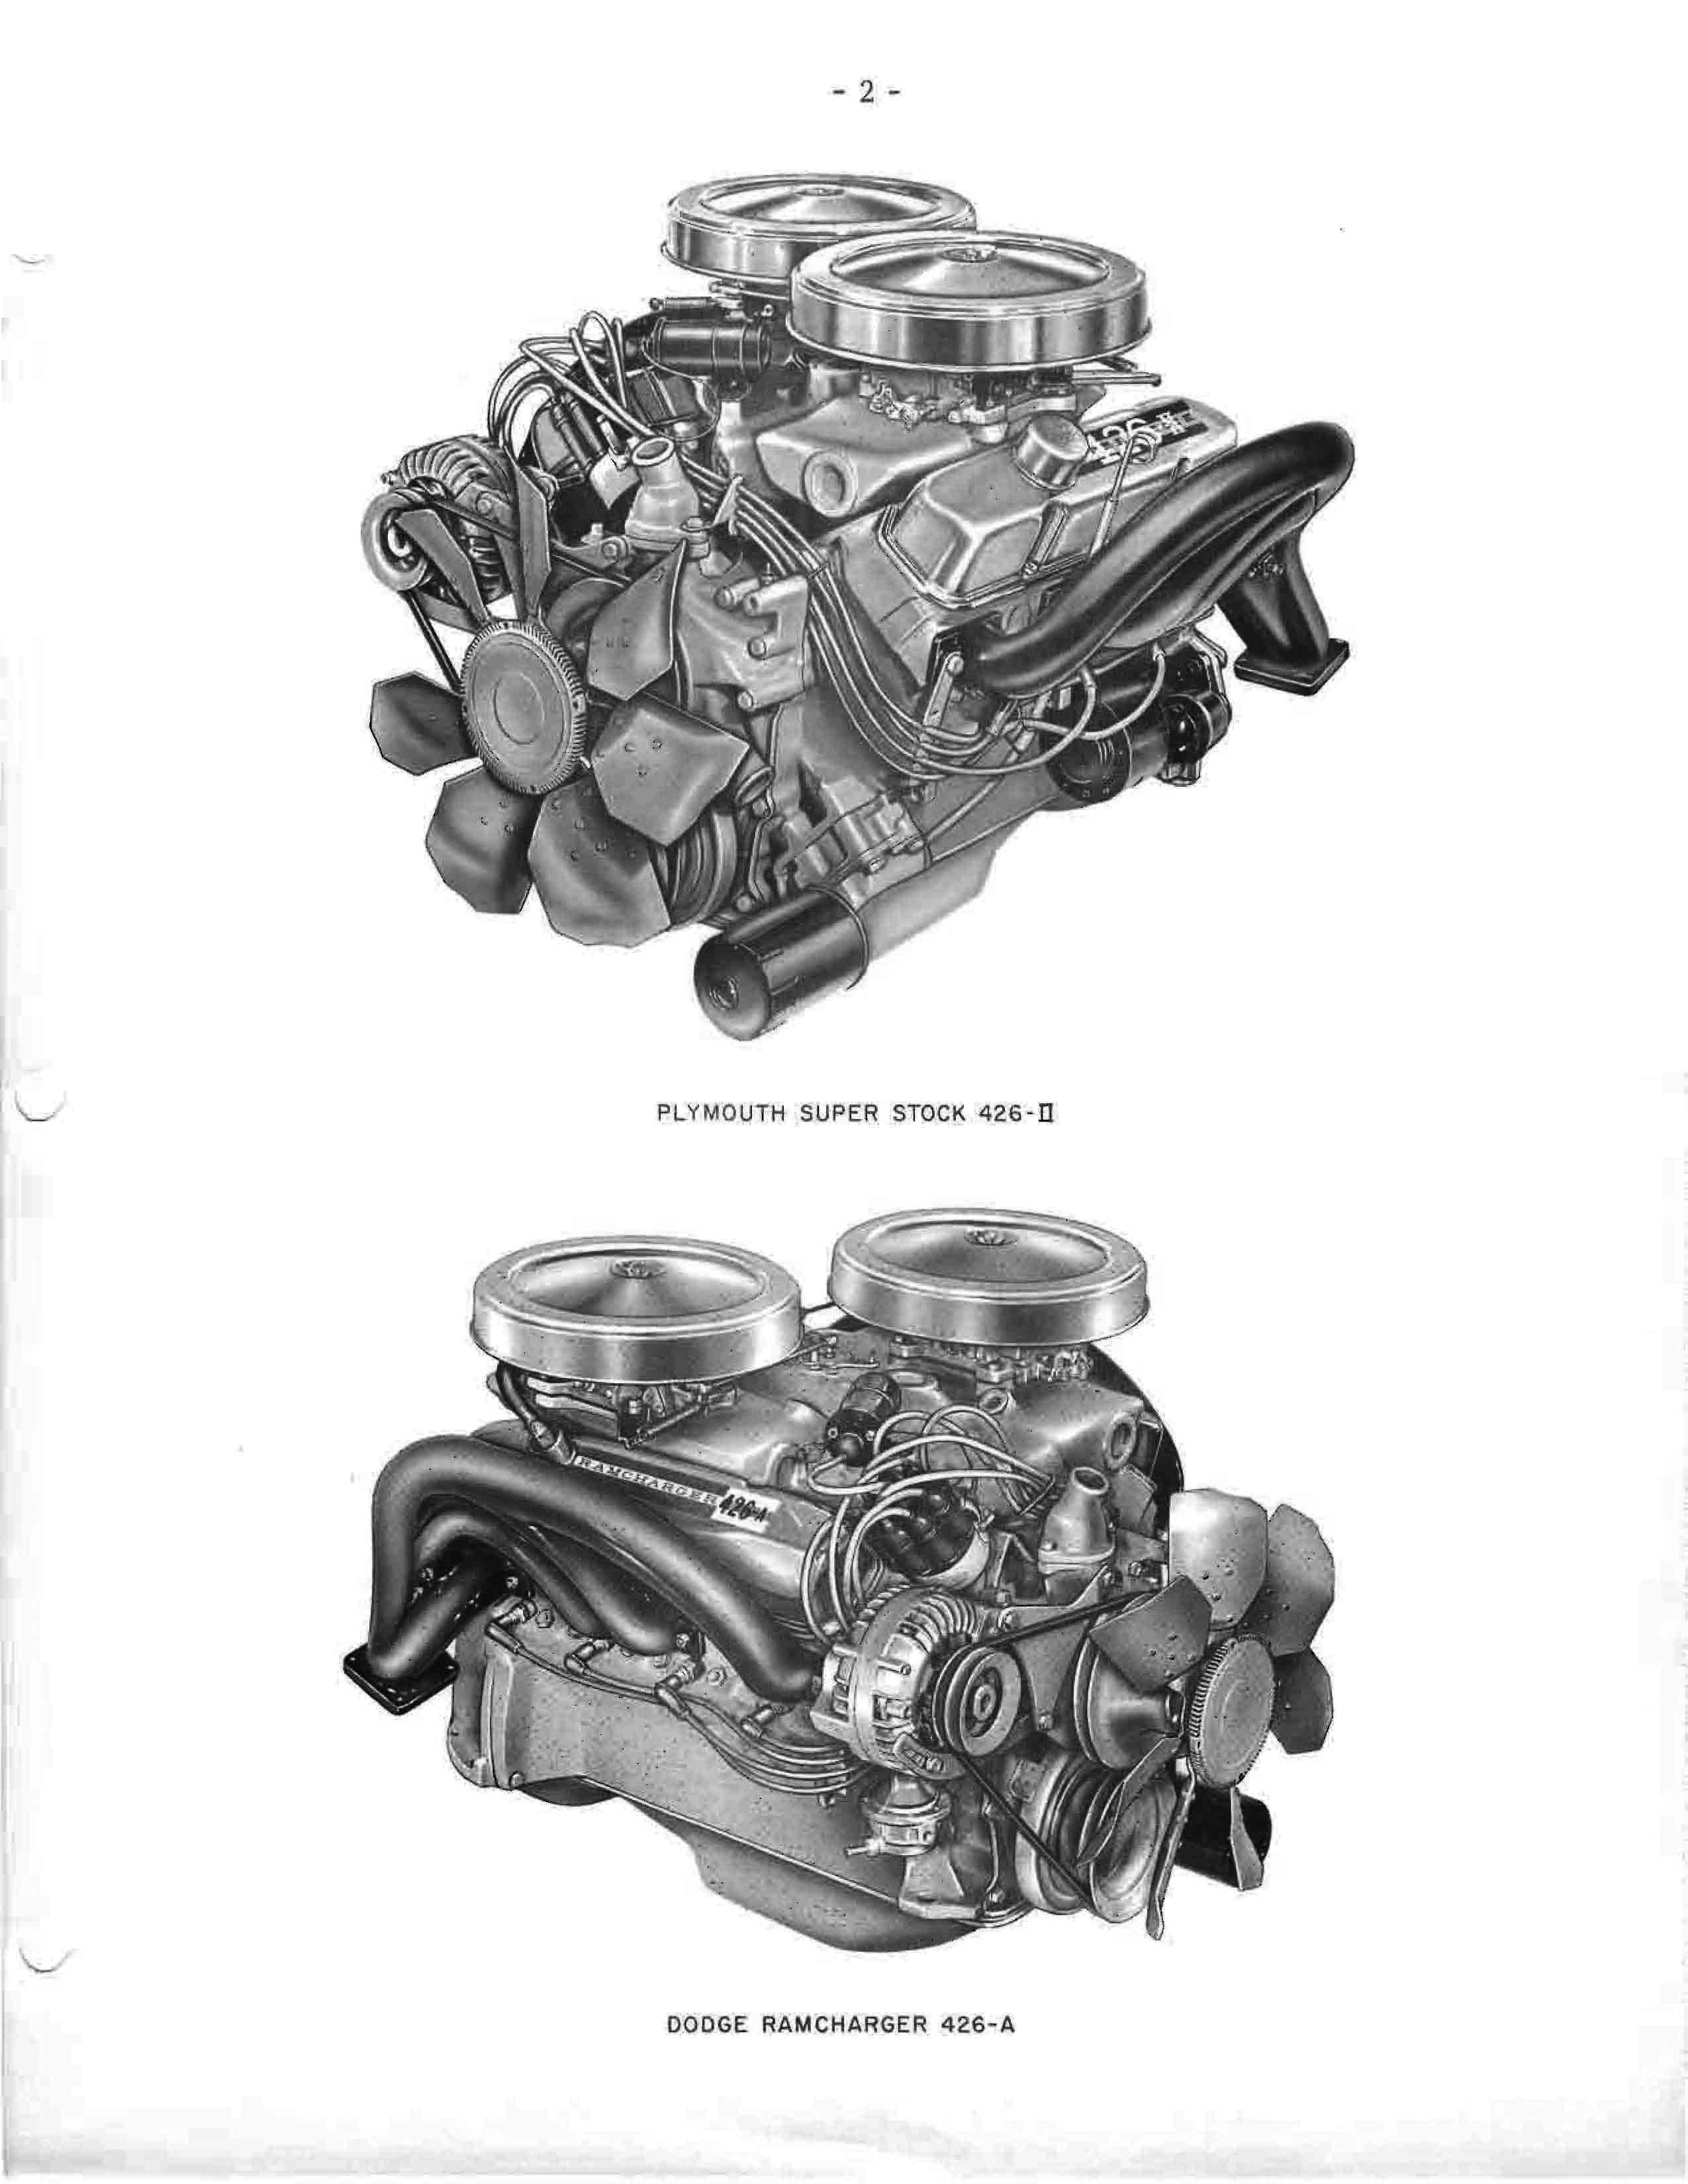 1963_Chrysler_426_Maximum_Performance_Engine-03